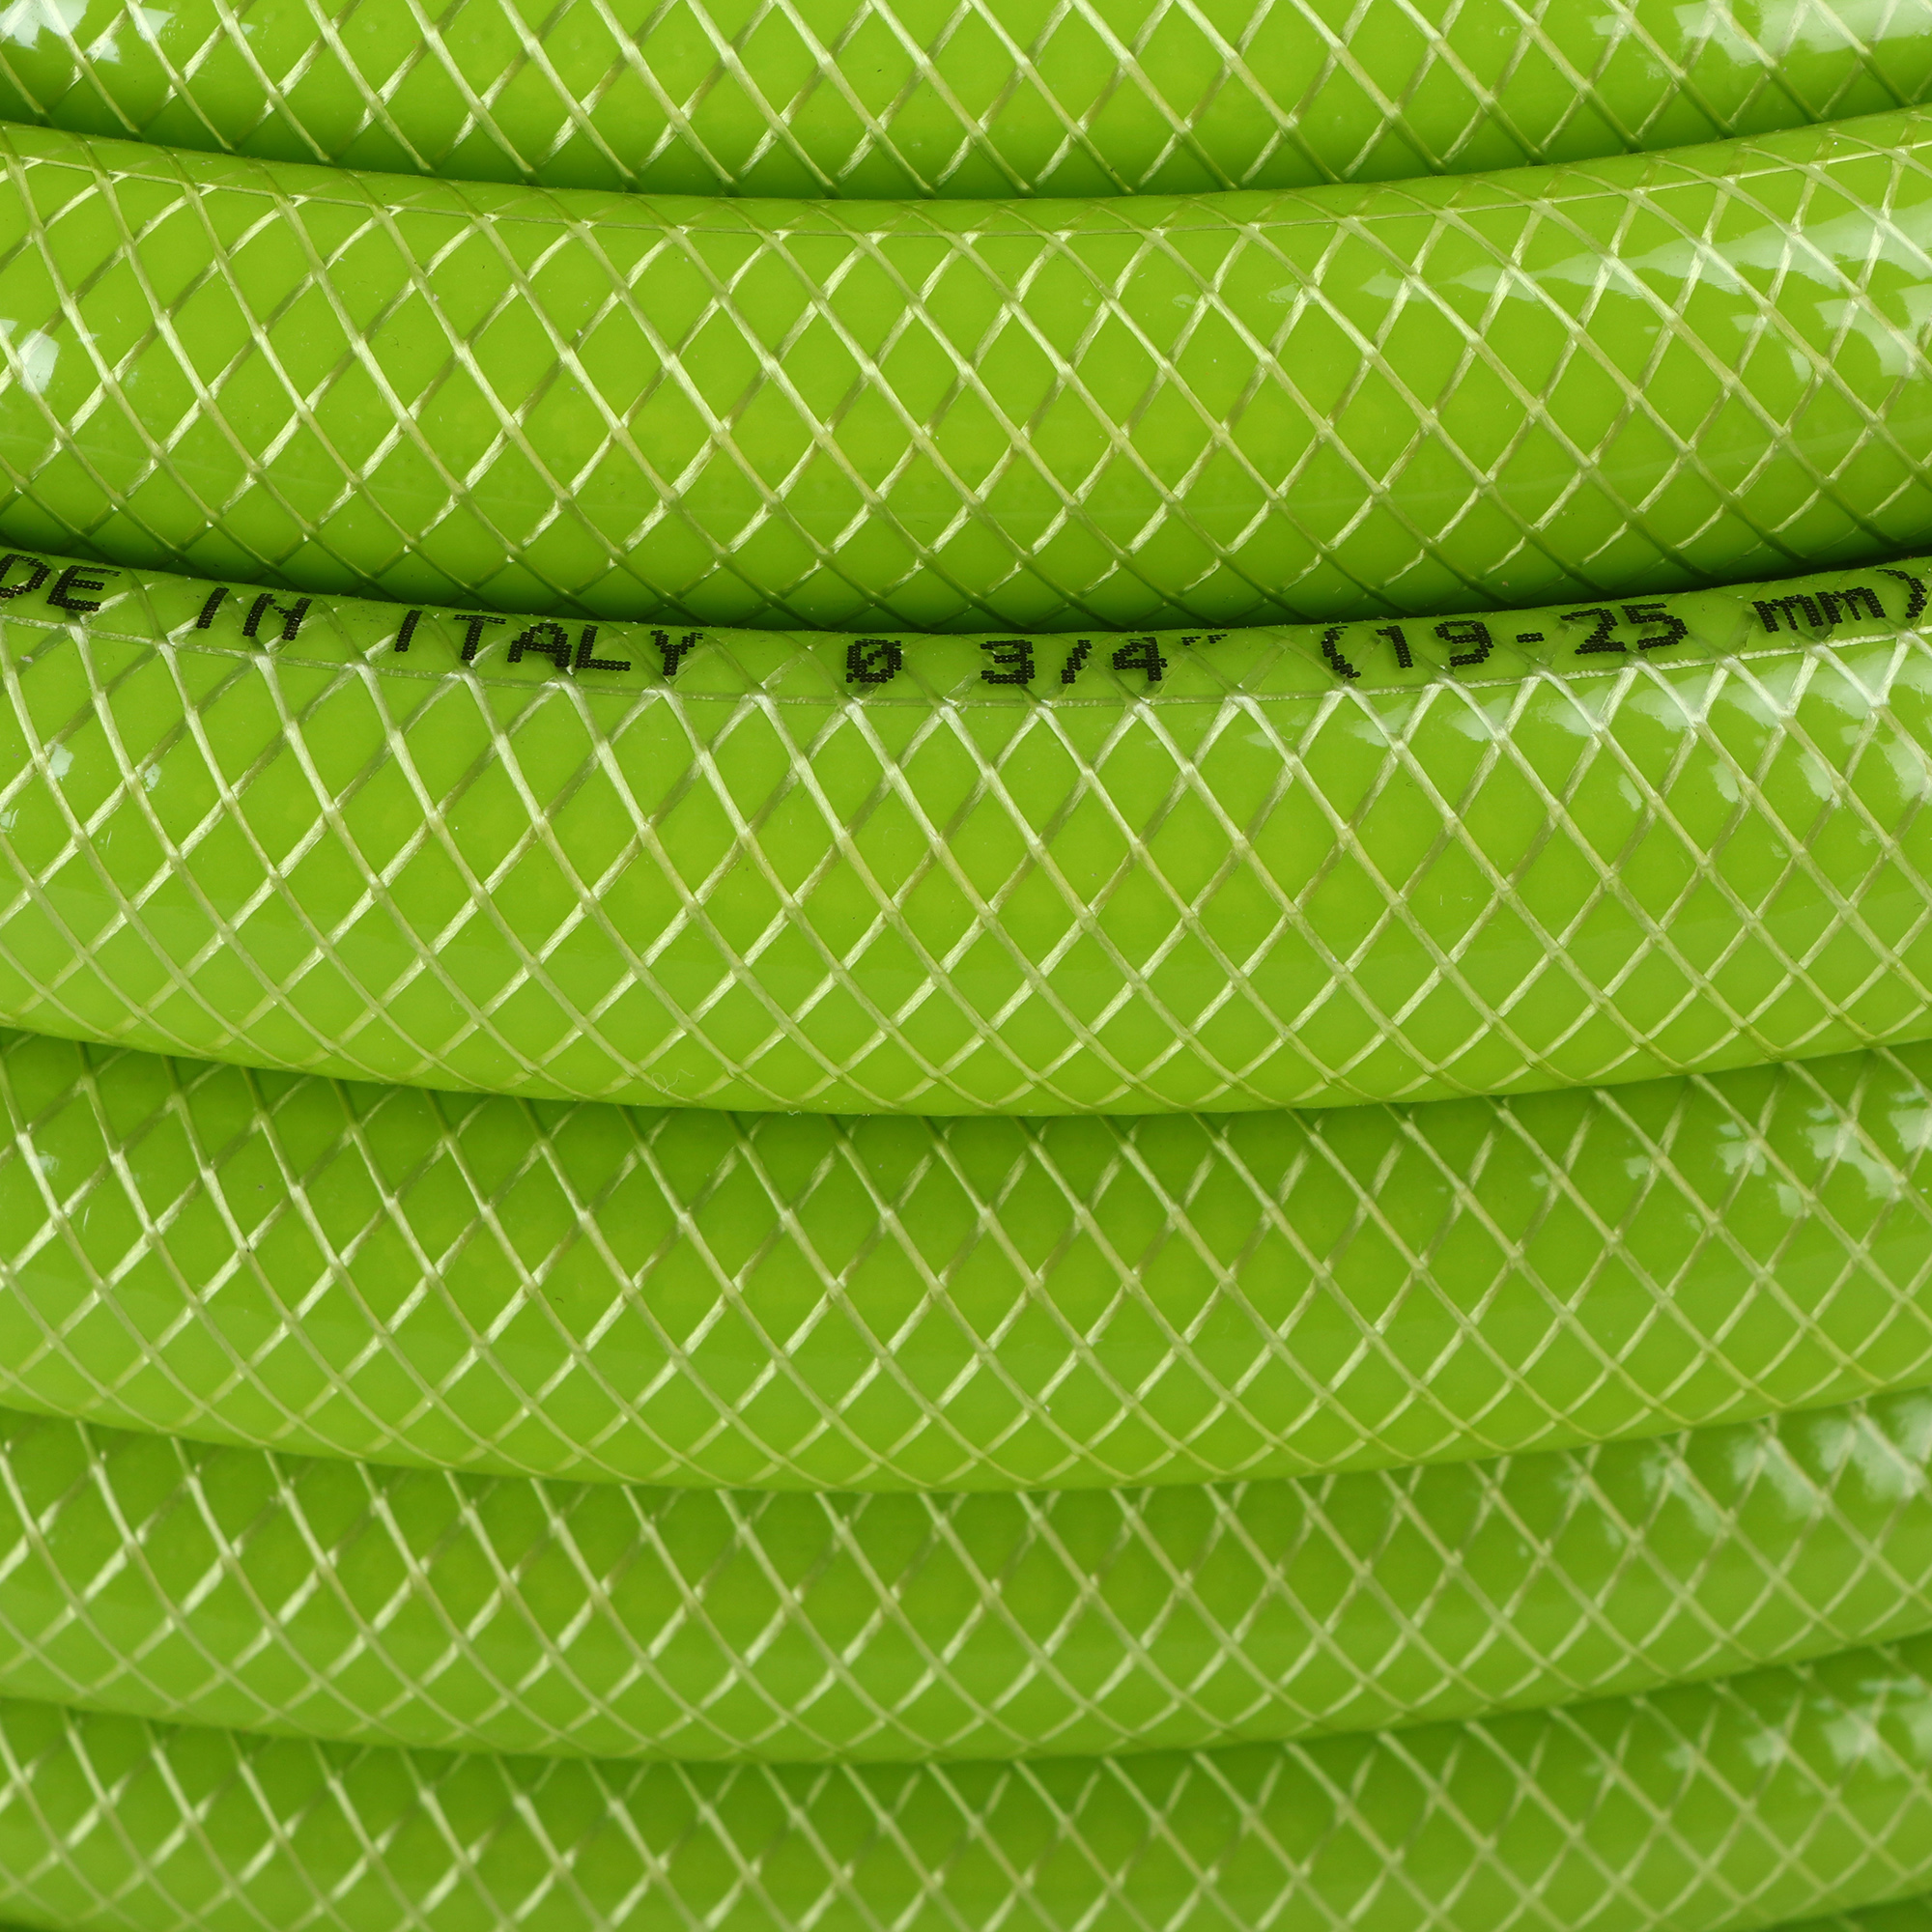 Шланг Claber Aquaviva plus 3/4 19-25 мм 25 м, цвет зелёный - фото 6